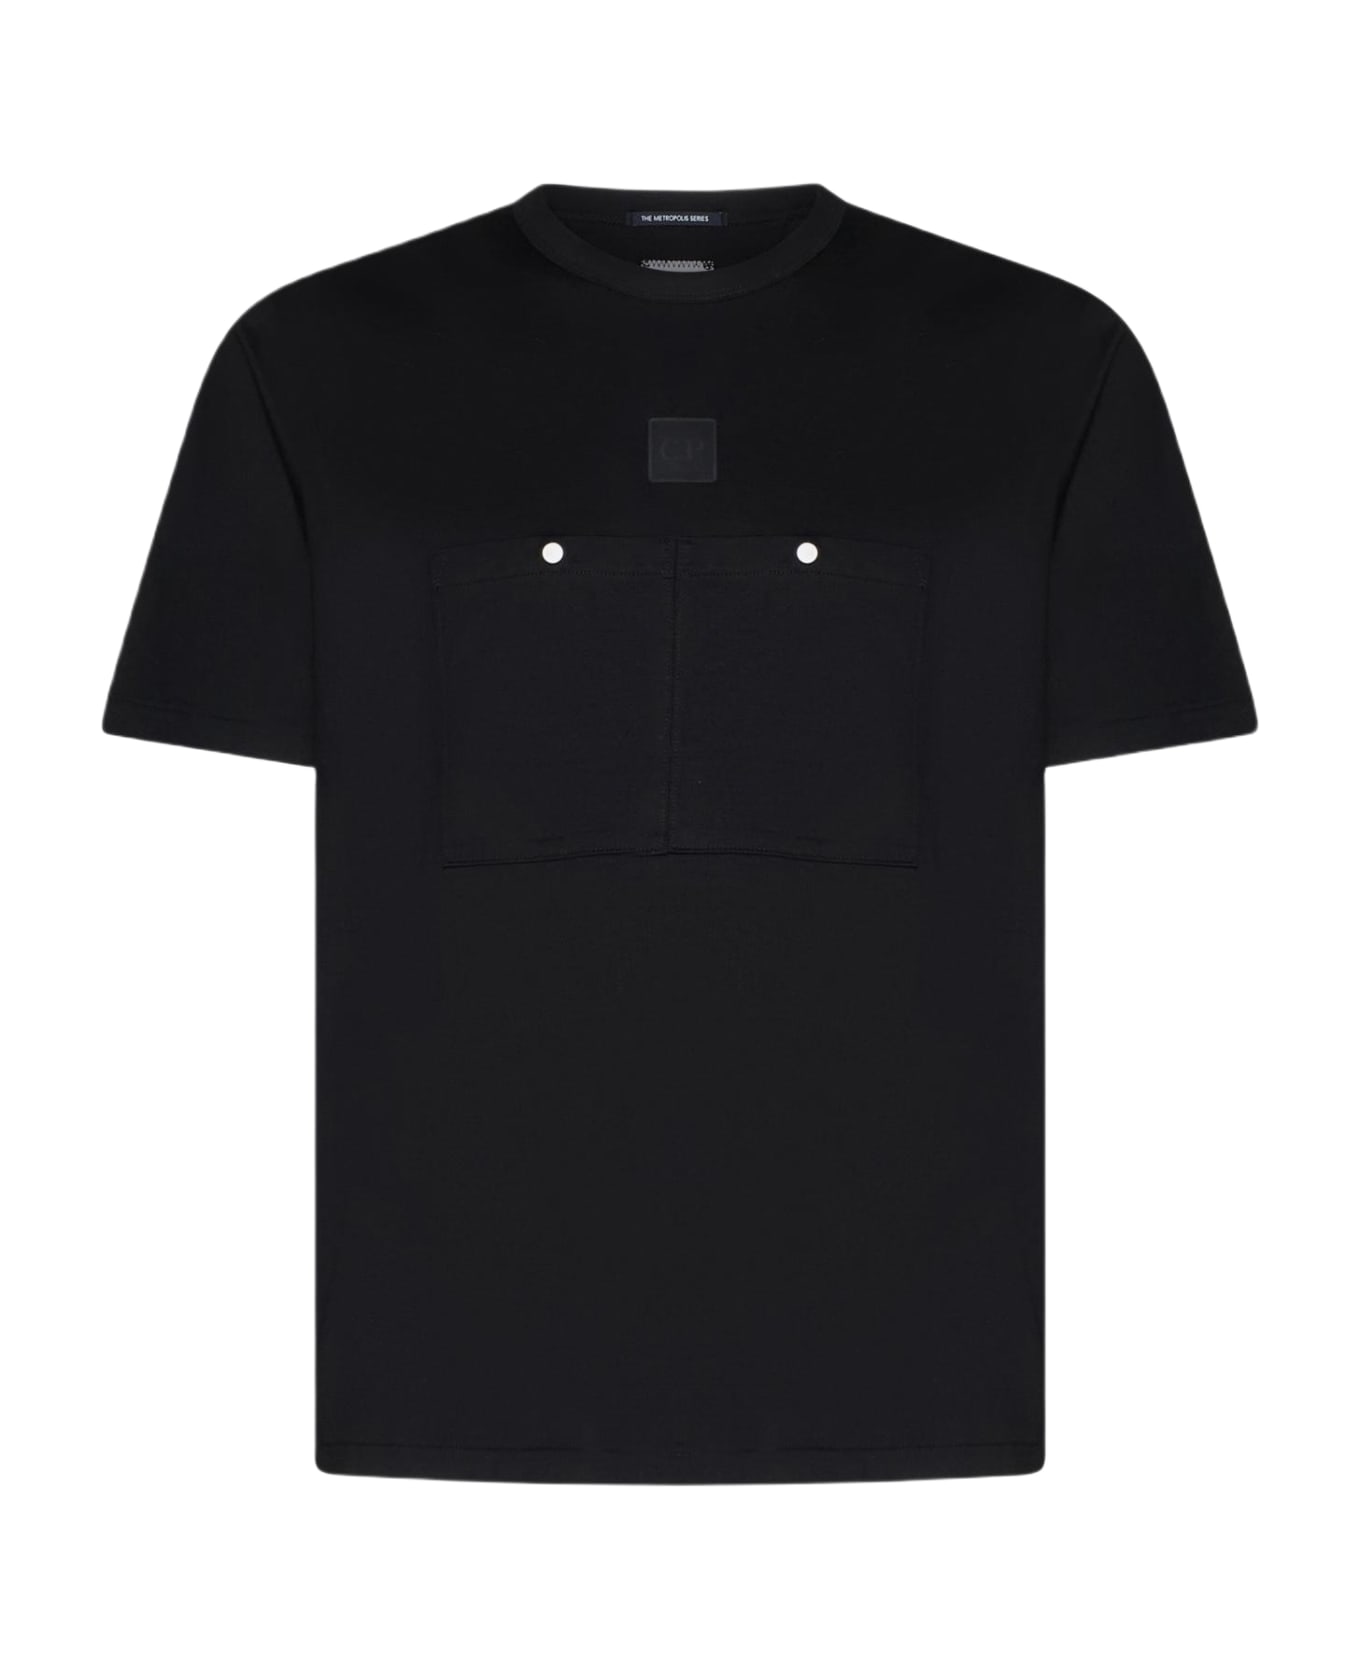 C.P. Company Logo And Pockets Cotton T-shirt - Black